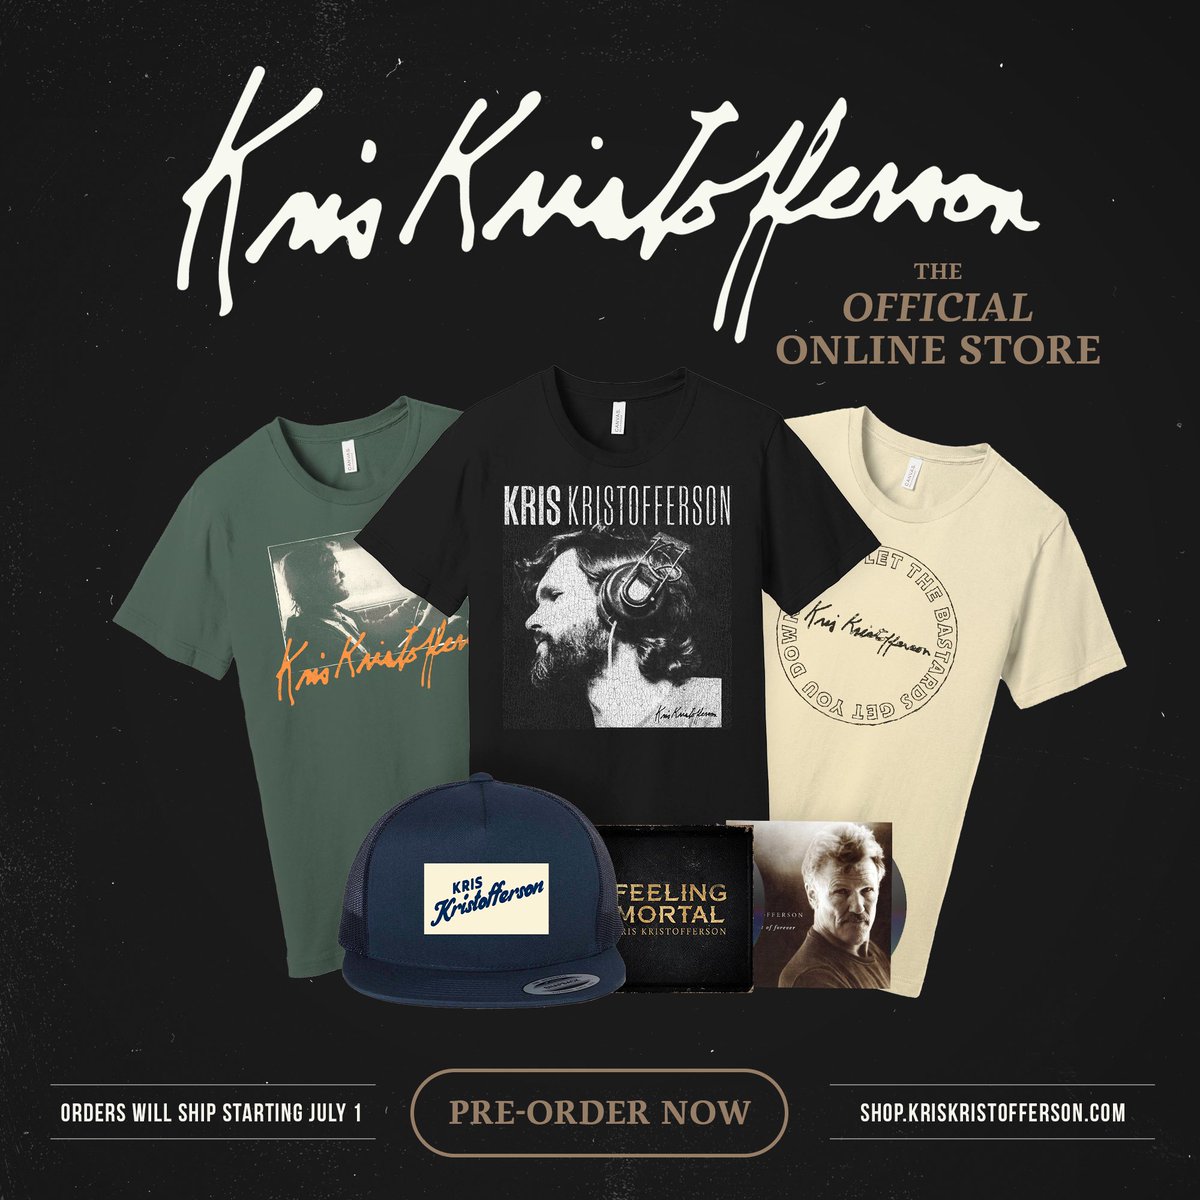 #Kristofferson fans, now’s your chance to own official Kris Kristofferson merchandise. Pre-orders have begun now! Shop now before it’s gone. Orders ship July 1. shop.kriskristofferson.com